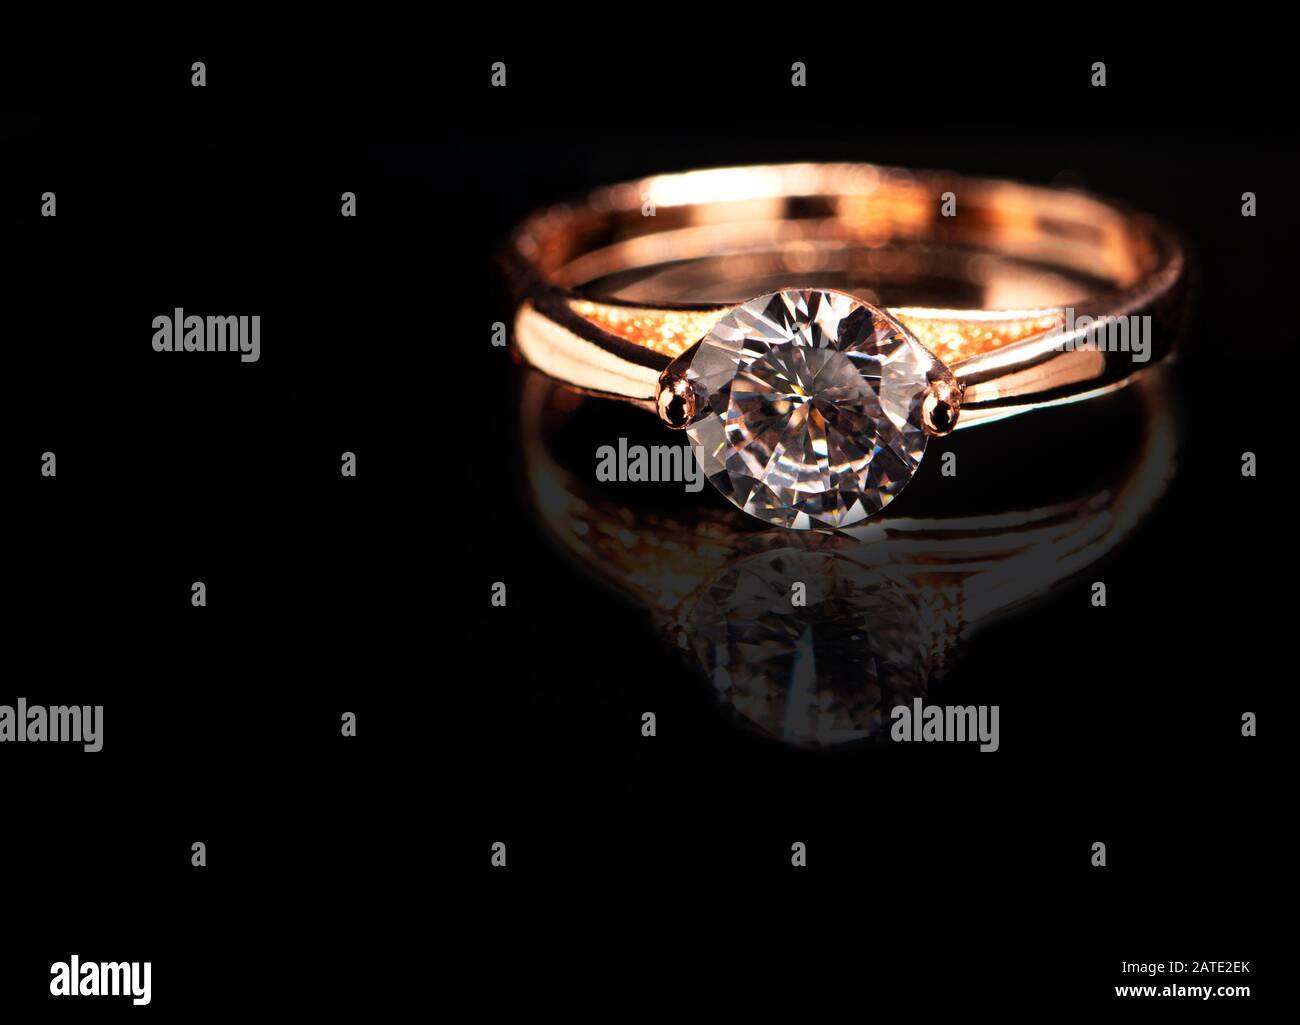 Wedding ring on black background. Selective focus Stock Photo